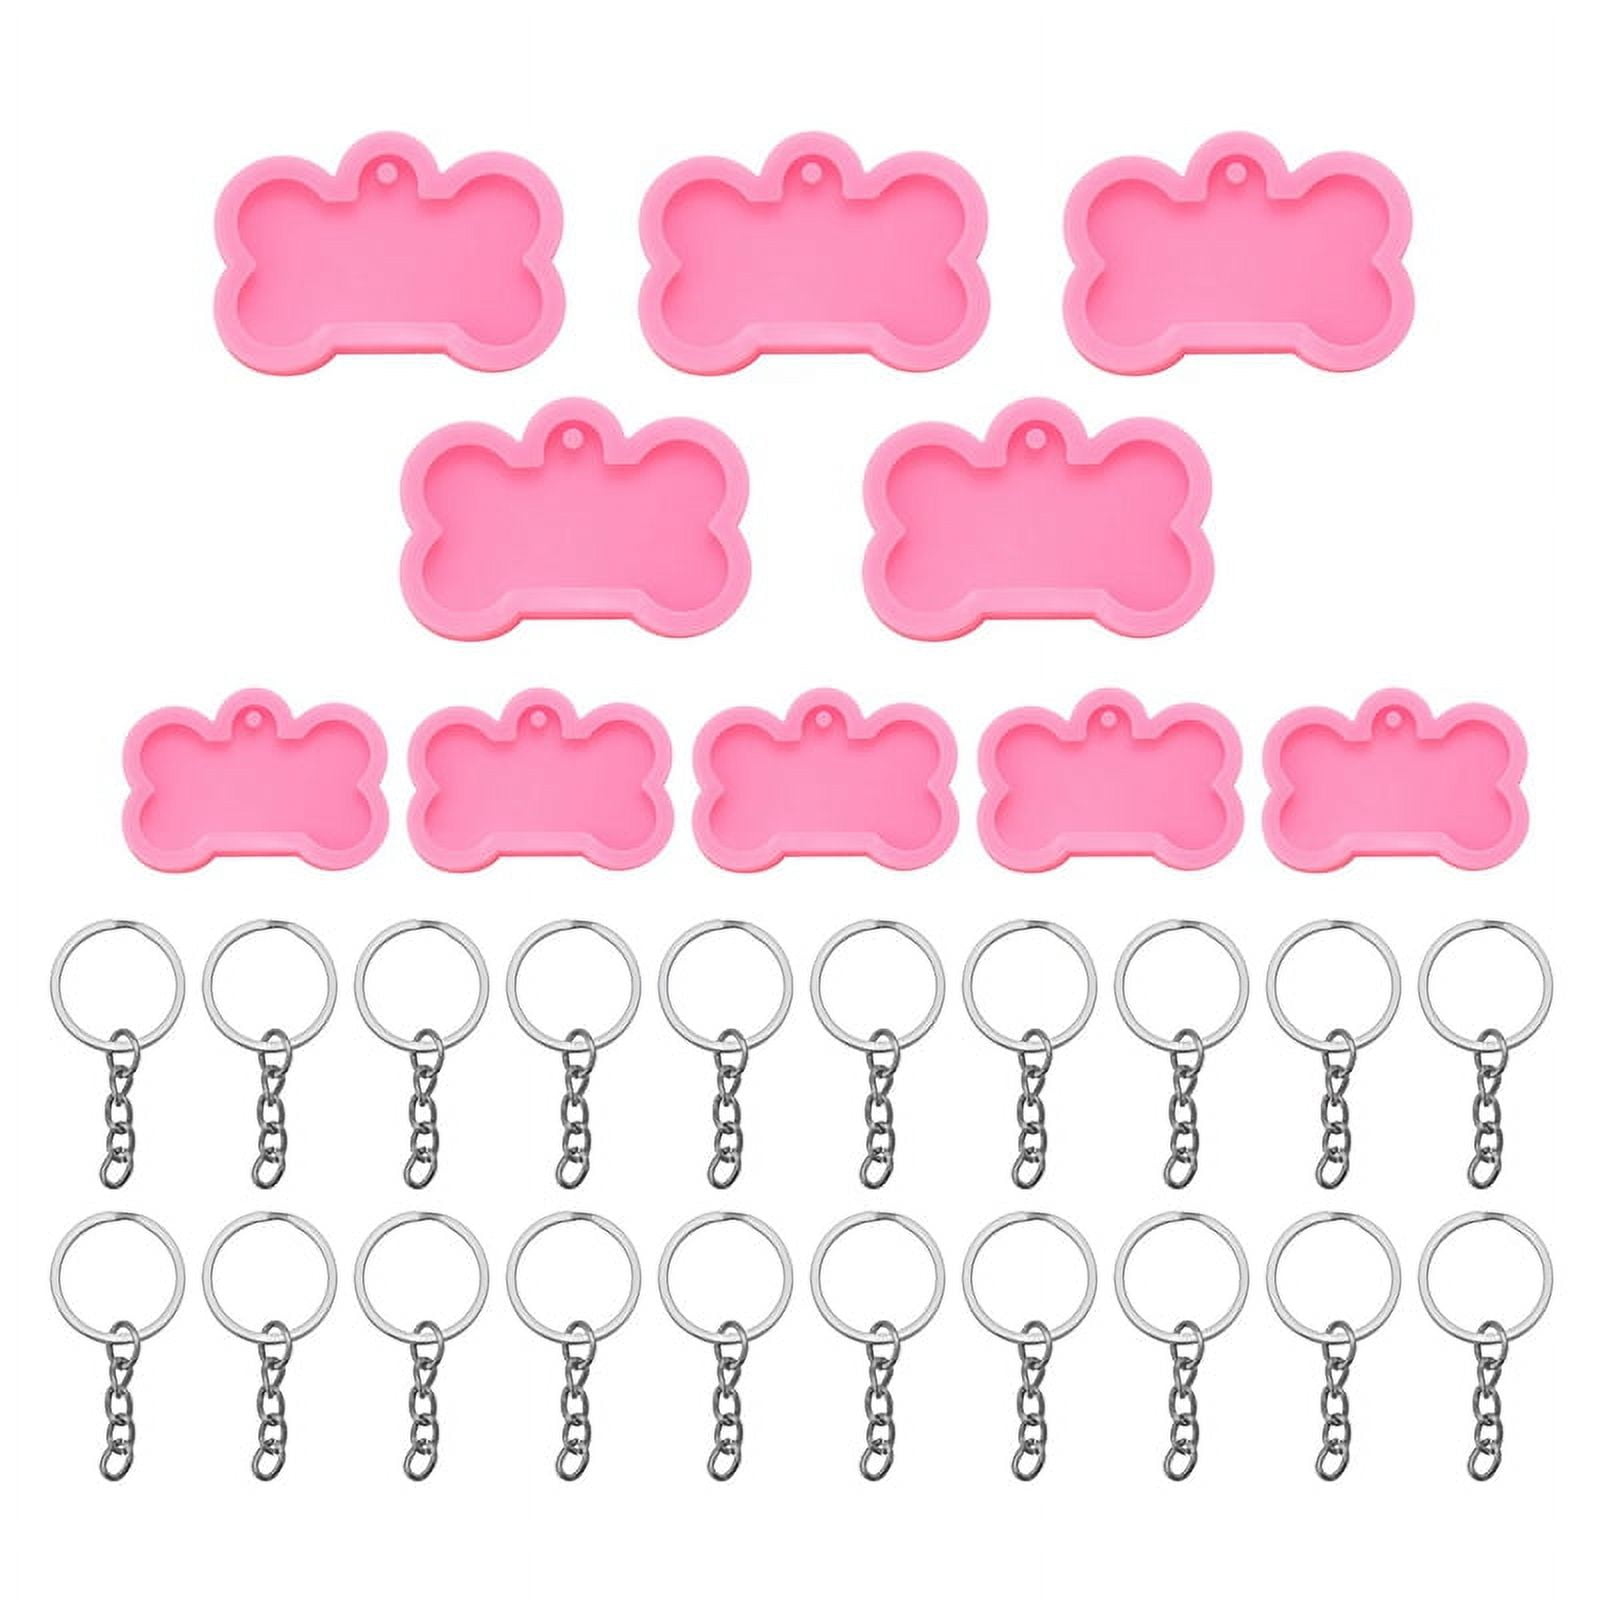  8 Pcs Dog Tag Molds for Resin, Reusable Dog Tag Silicone Mold  Kit, Pink Dog Tag Resin Mold with 10 Pcs Key Chain, Resin Keychain Mold  with Heart, Bone, Claw Shape 